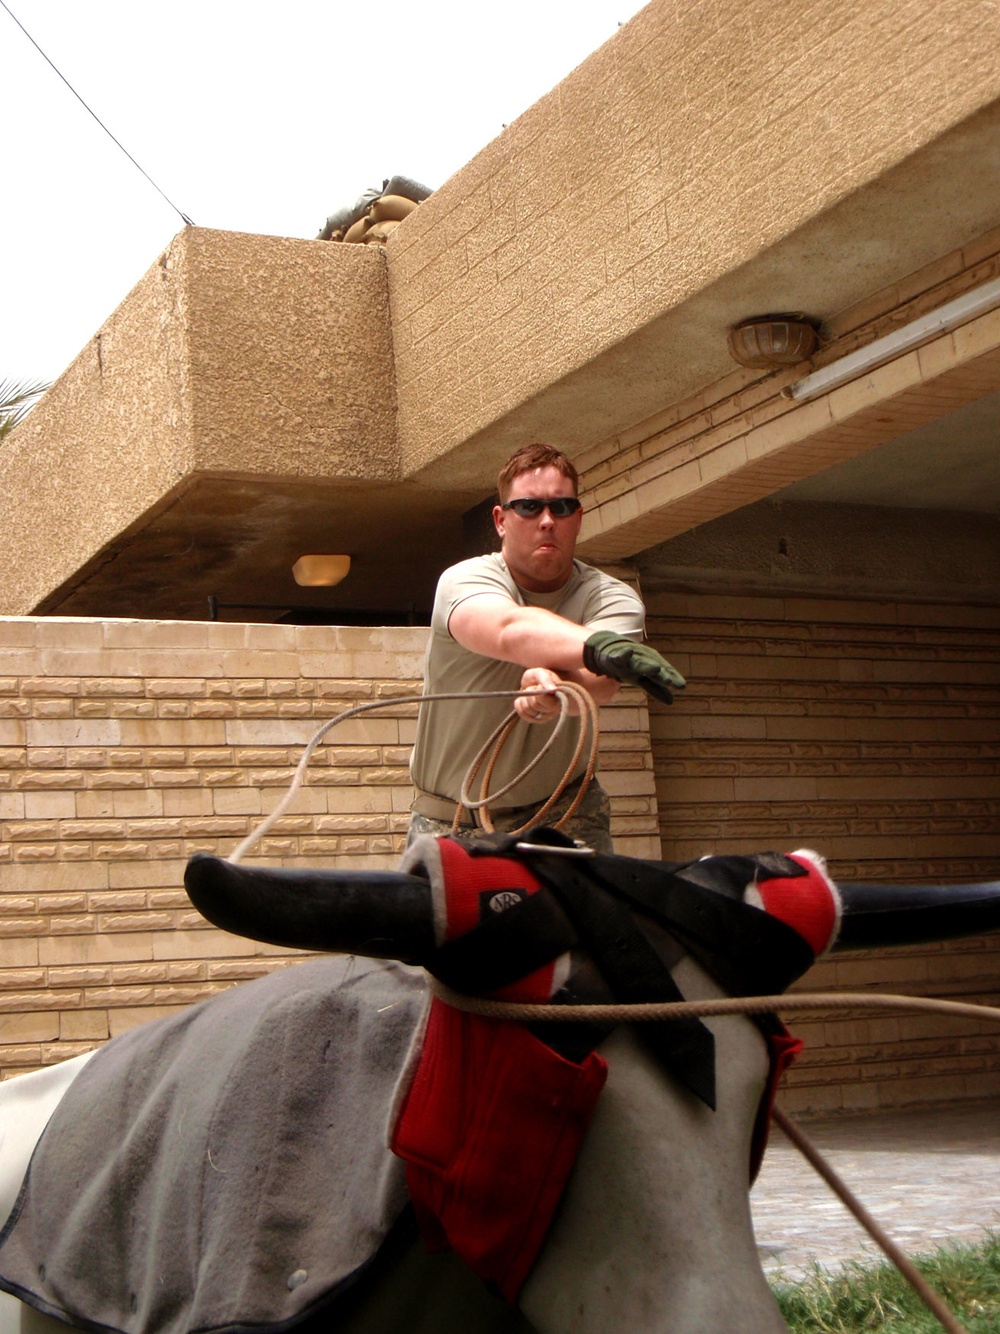 Cowboy/Soldier hones roping skills while on deployment in Baghdad